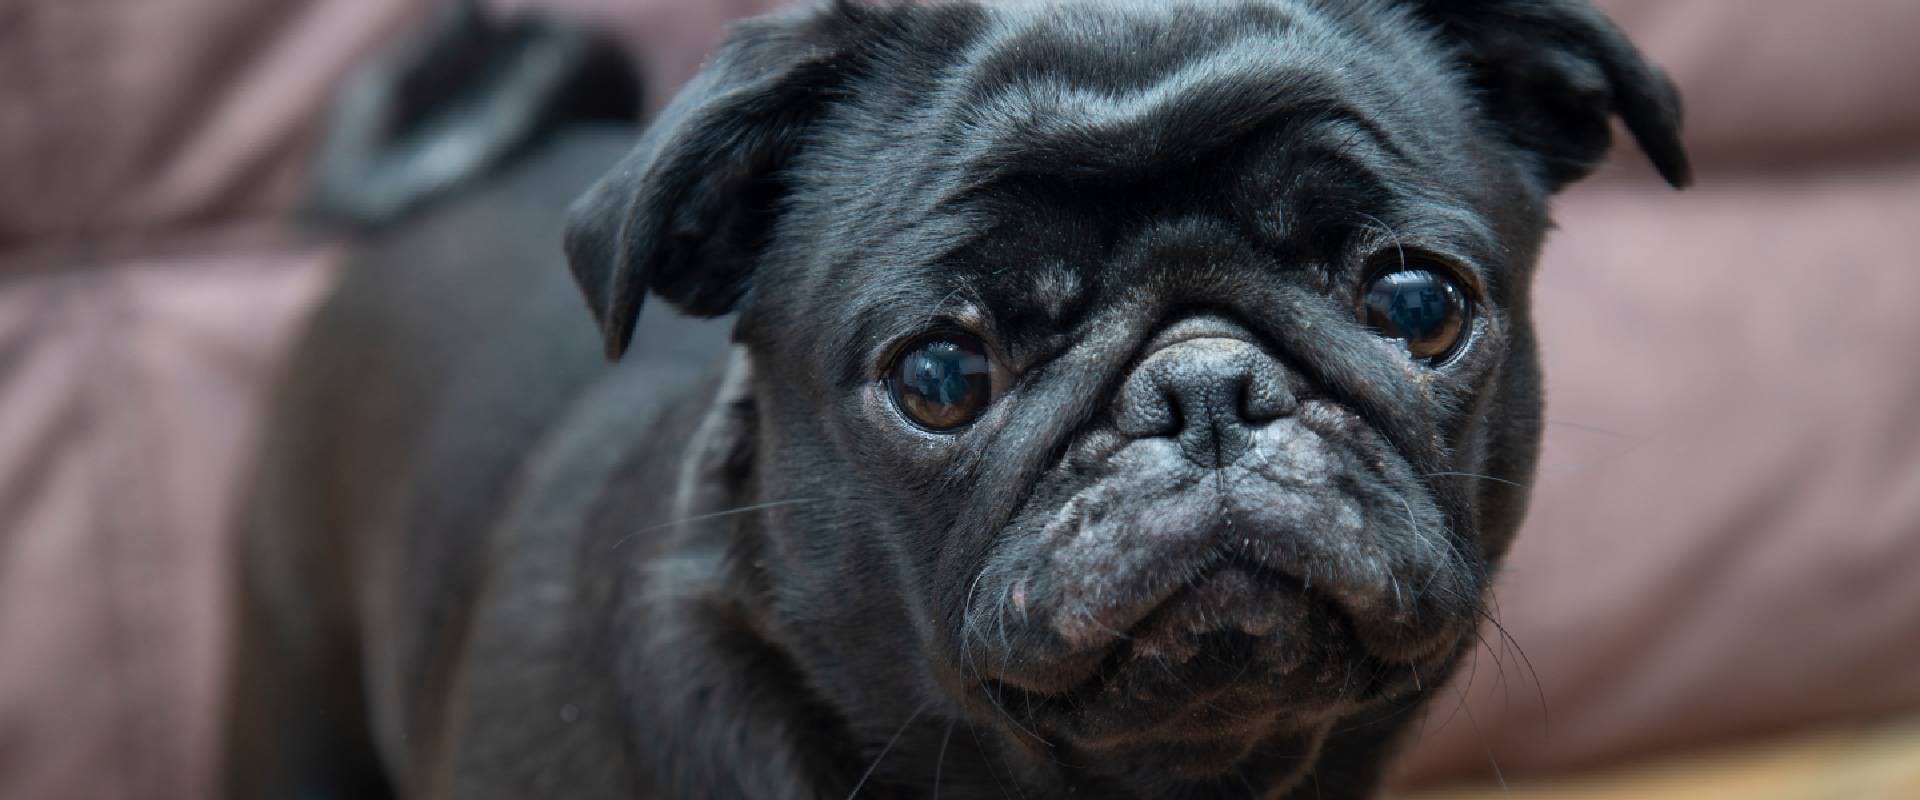 Close-up of a black Pug puppy